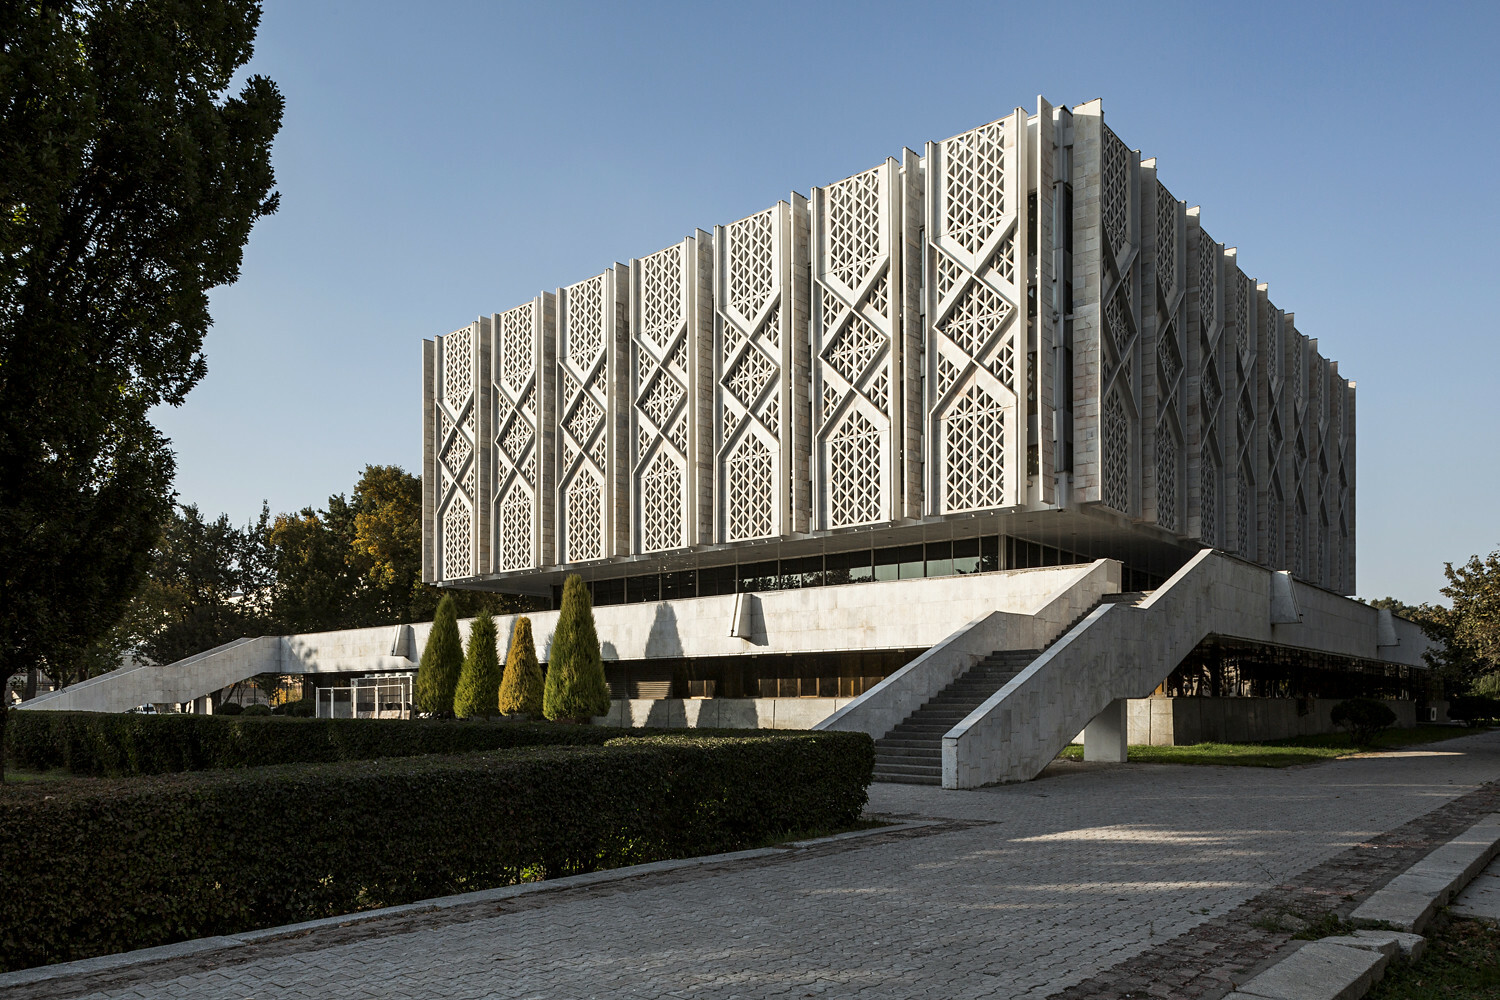 musée national d’histoire, ouzbékistan (1968-70) par yevgeniy rozanov et vsevolod shestopalov